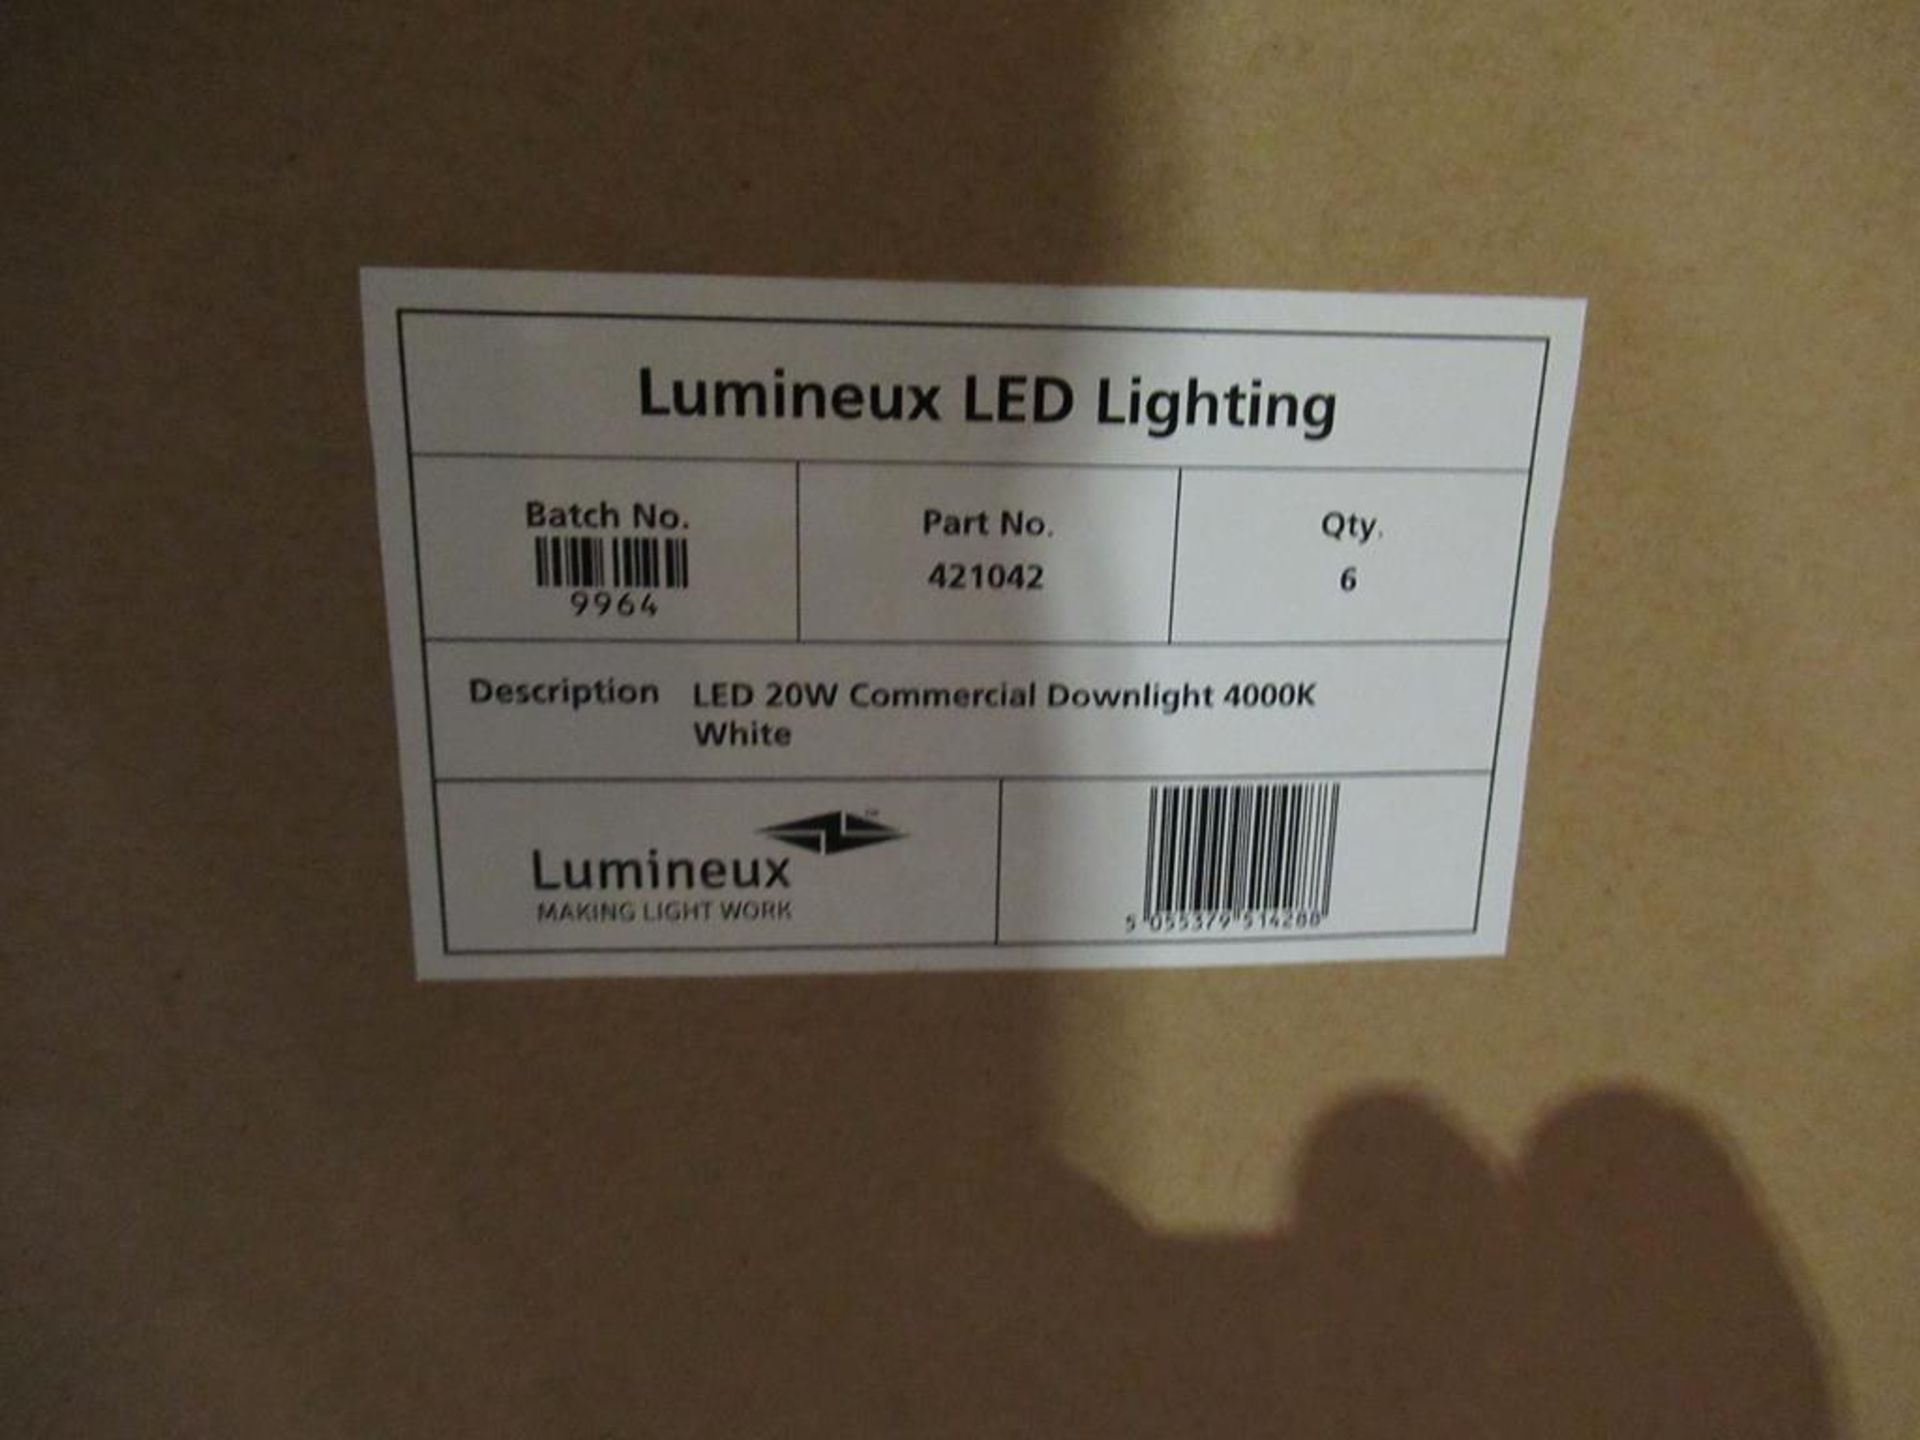 18 x LED 20W 10 inch dia Downlight 4000K White Trim OEM Trade Price £270 - Image 3 of 3